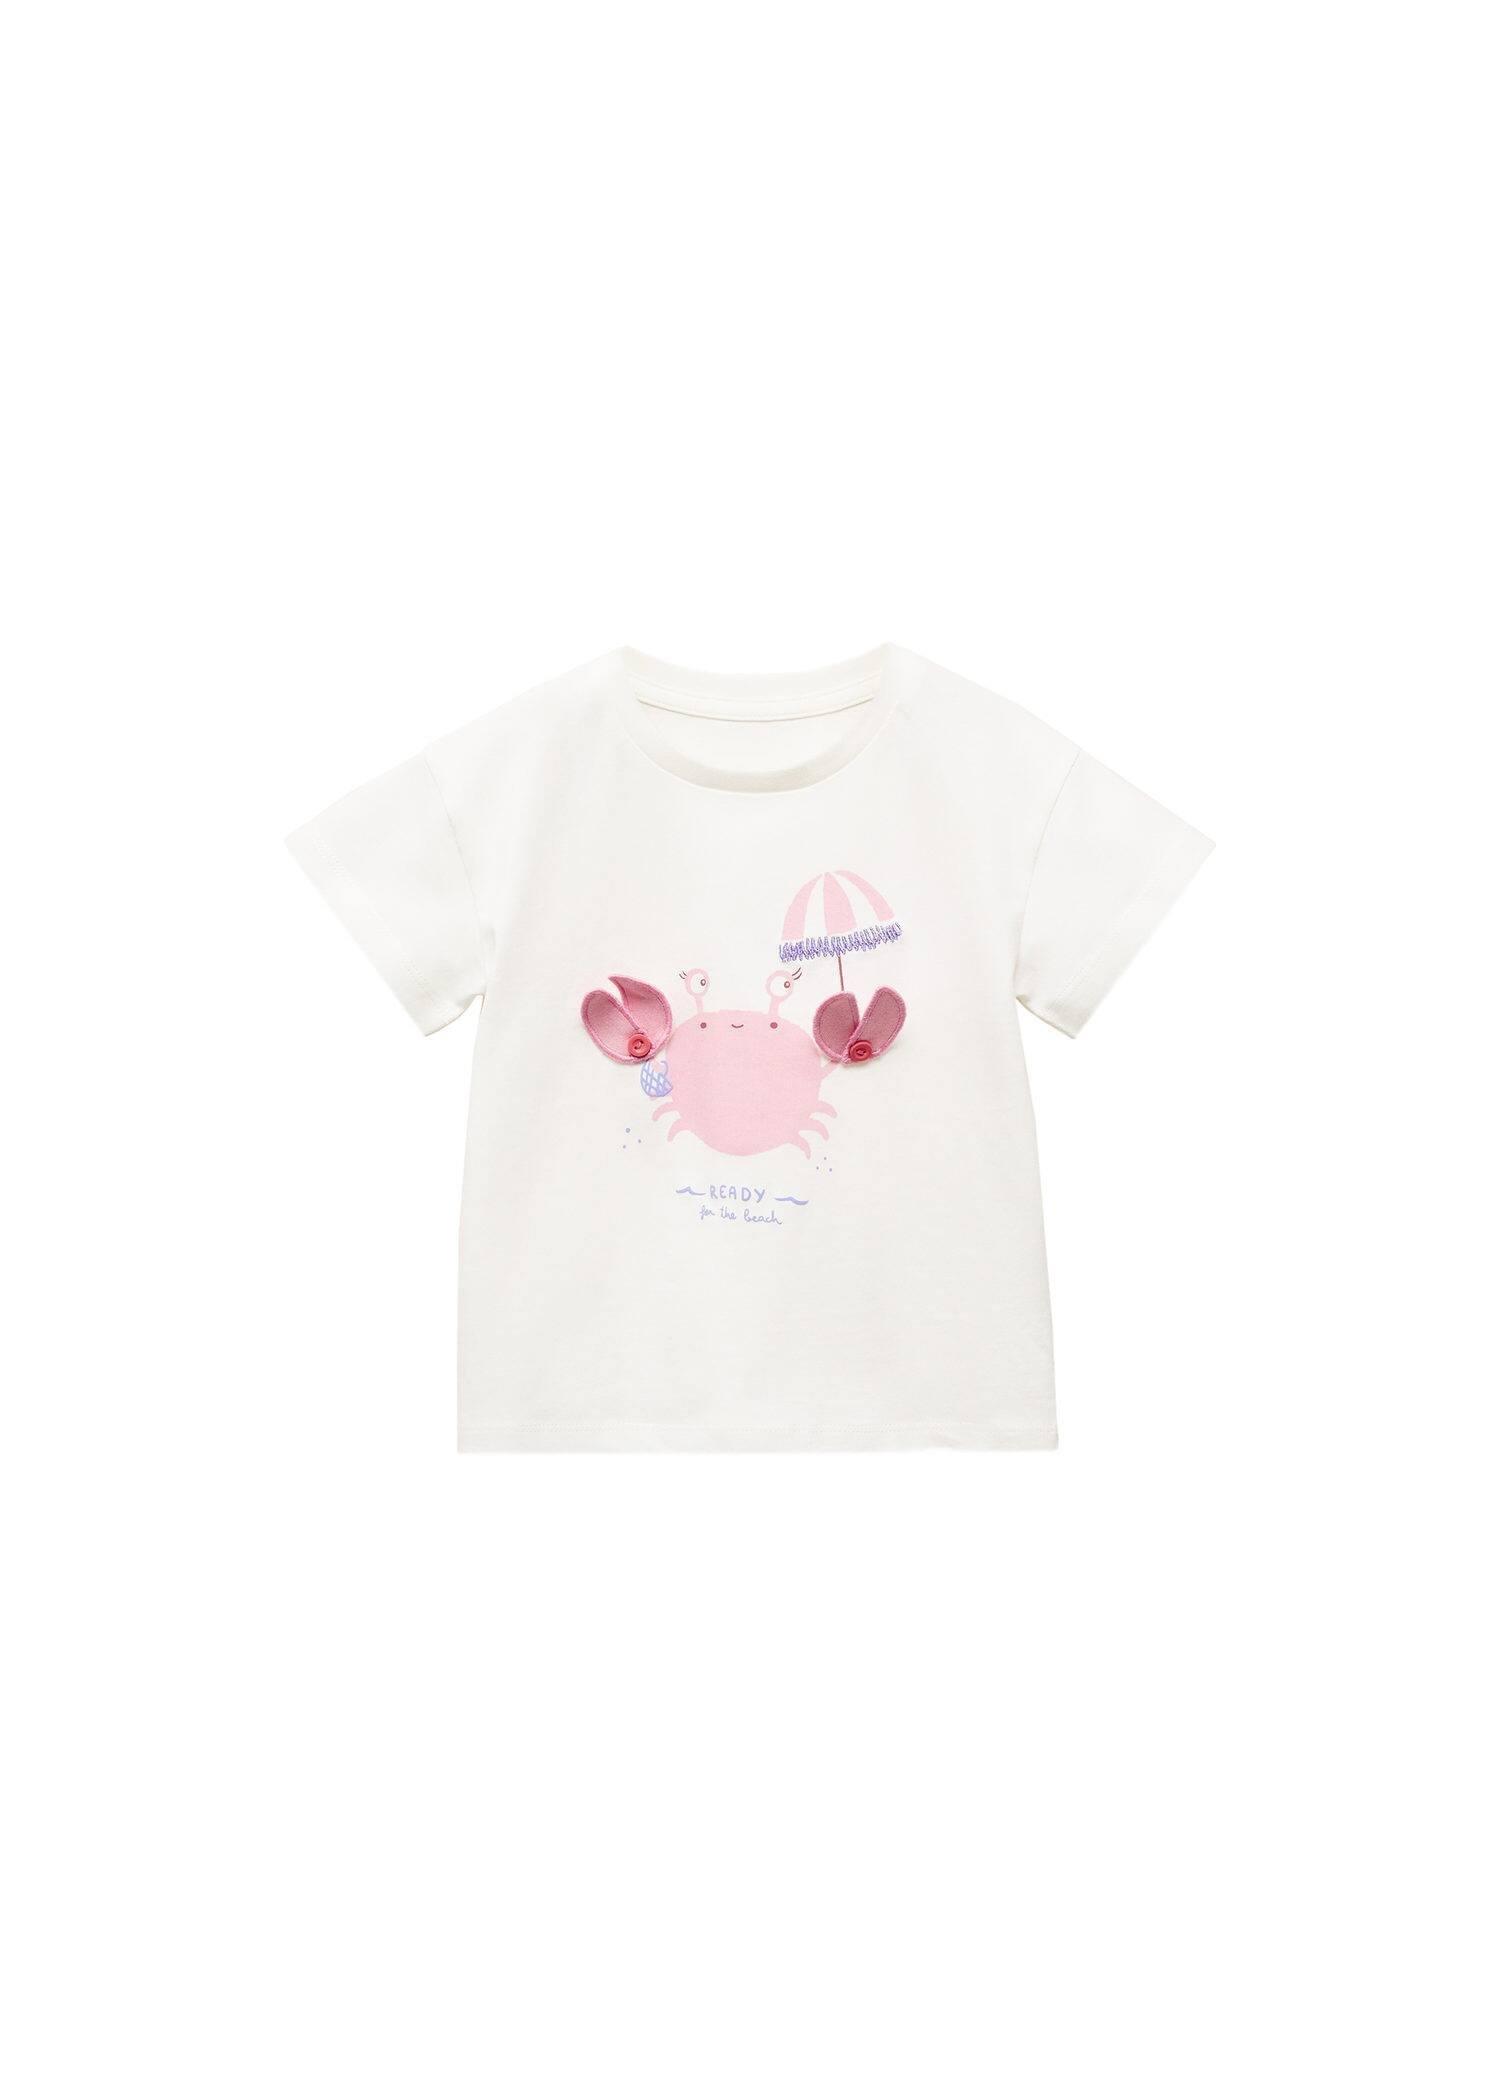 Mango - White Short-Sleeved Printed T-Shirt, Kids Girls